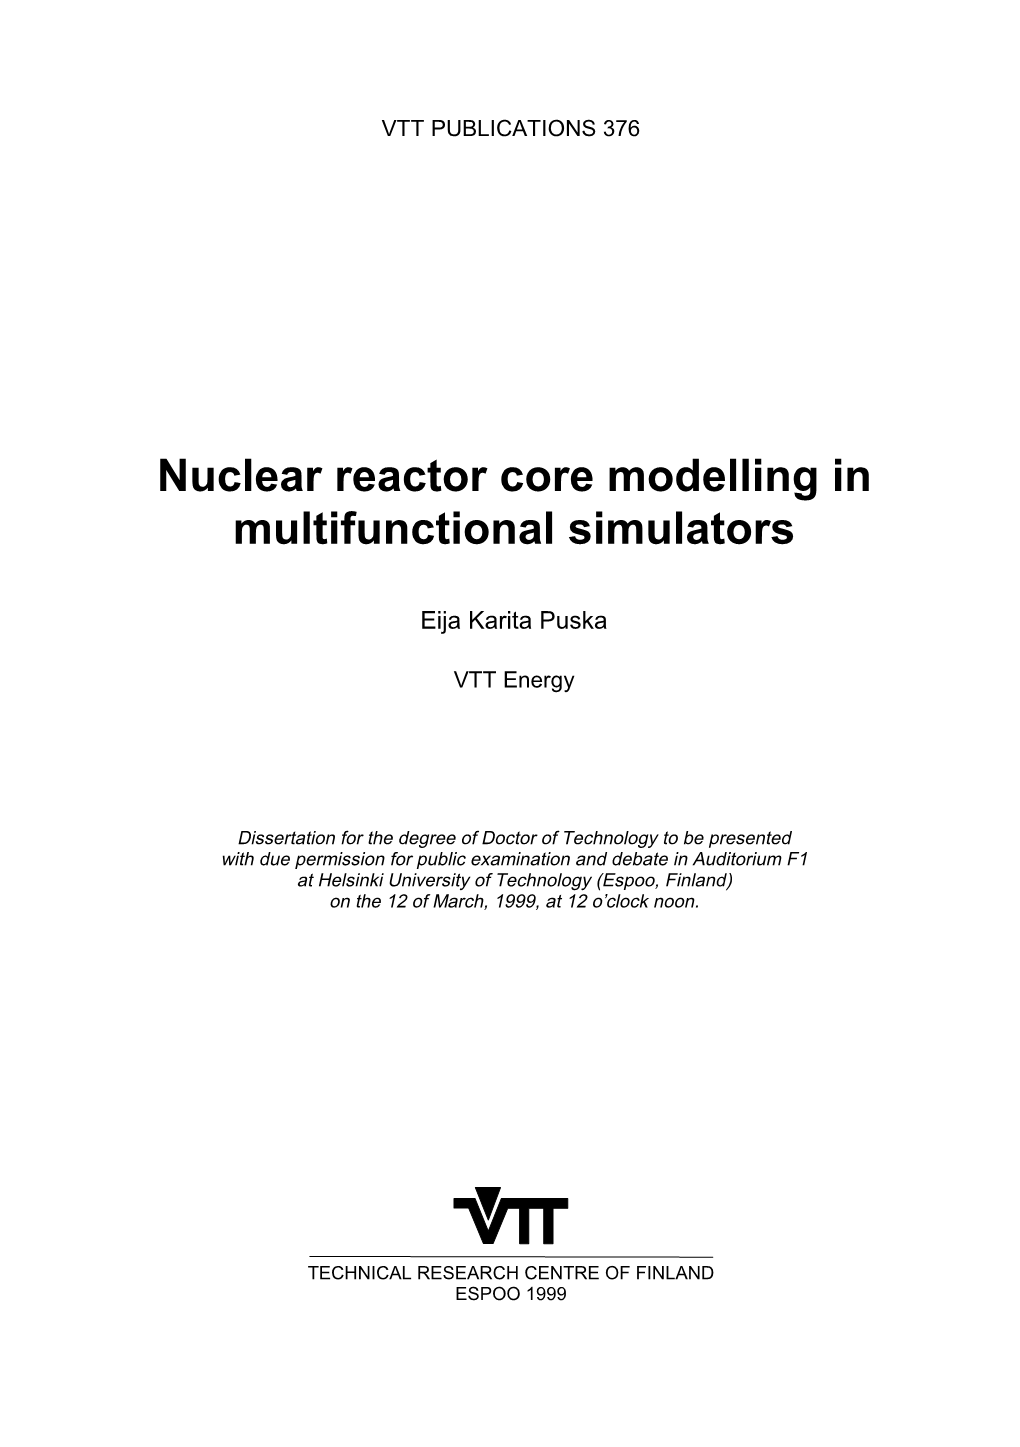 Nuclear Reactor Core Modelling in Multifunctional Simulators